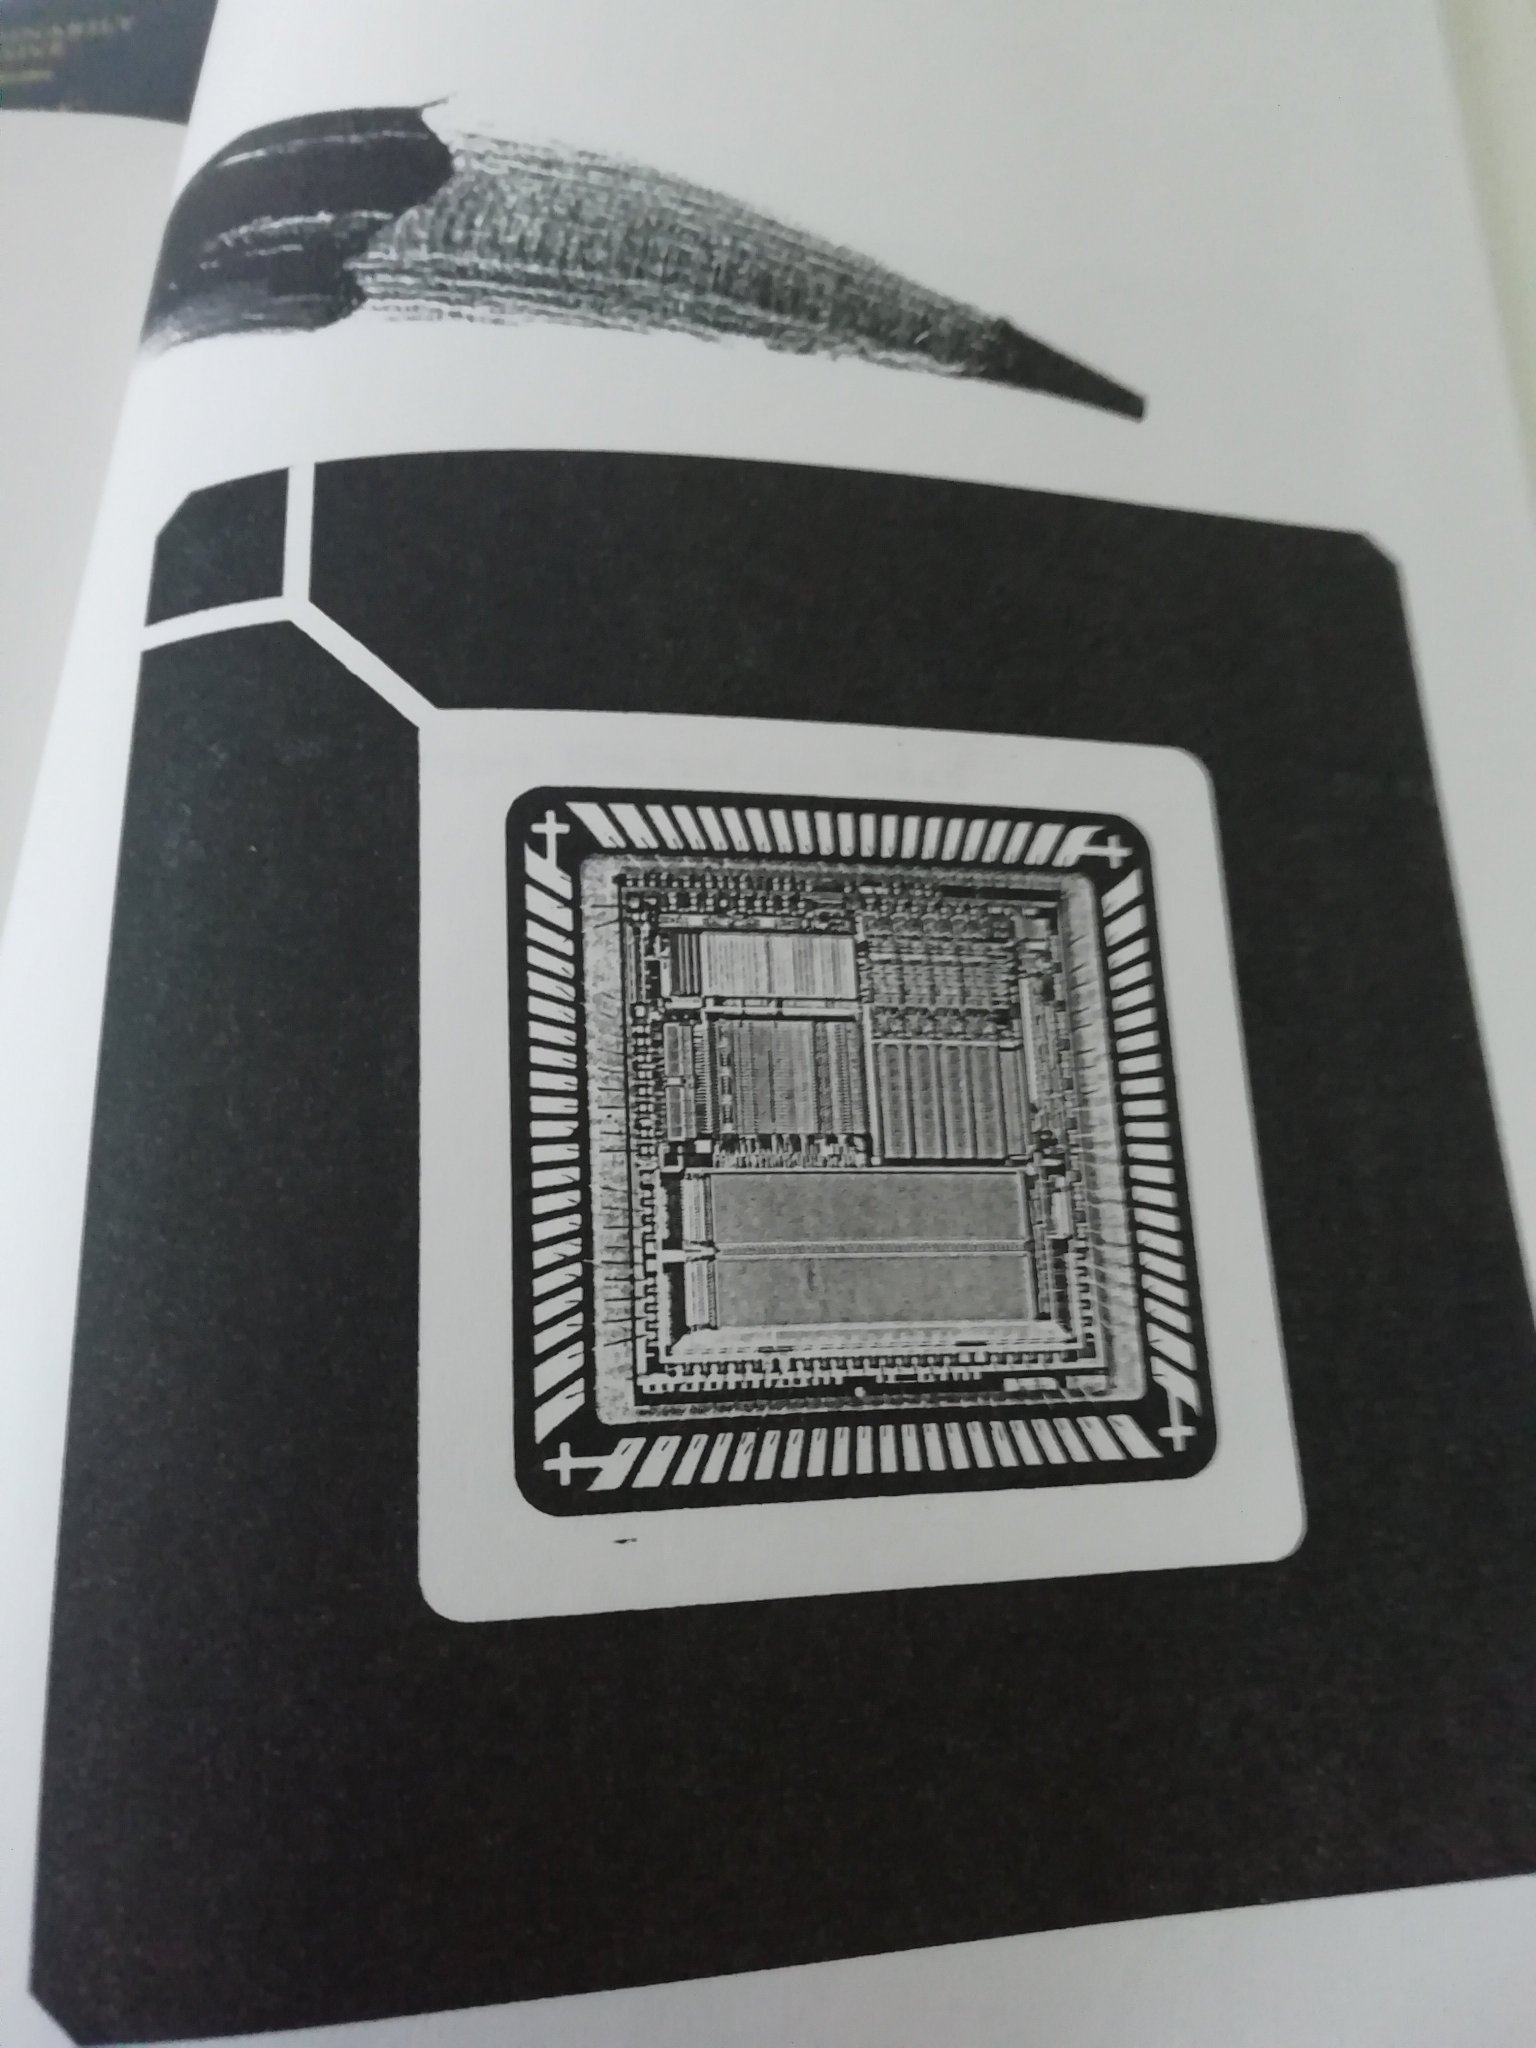 Transputer chip